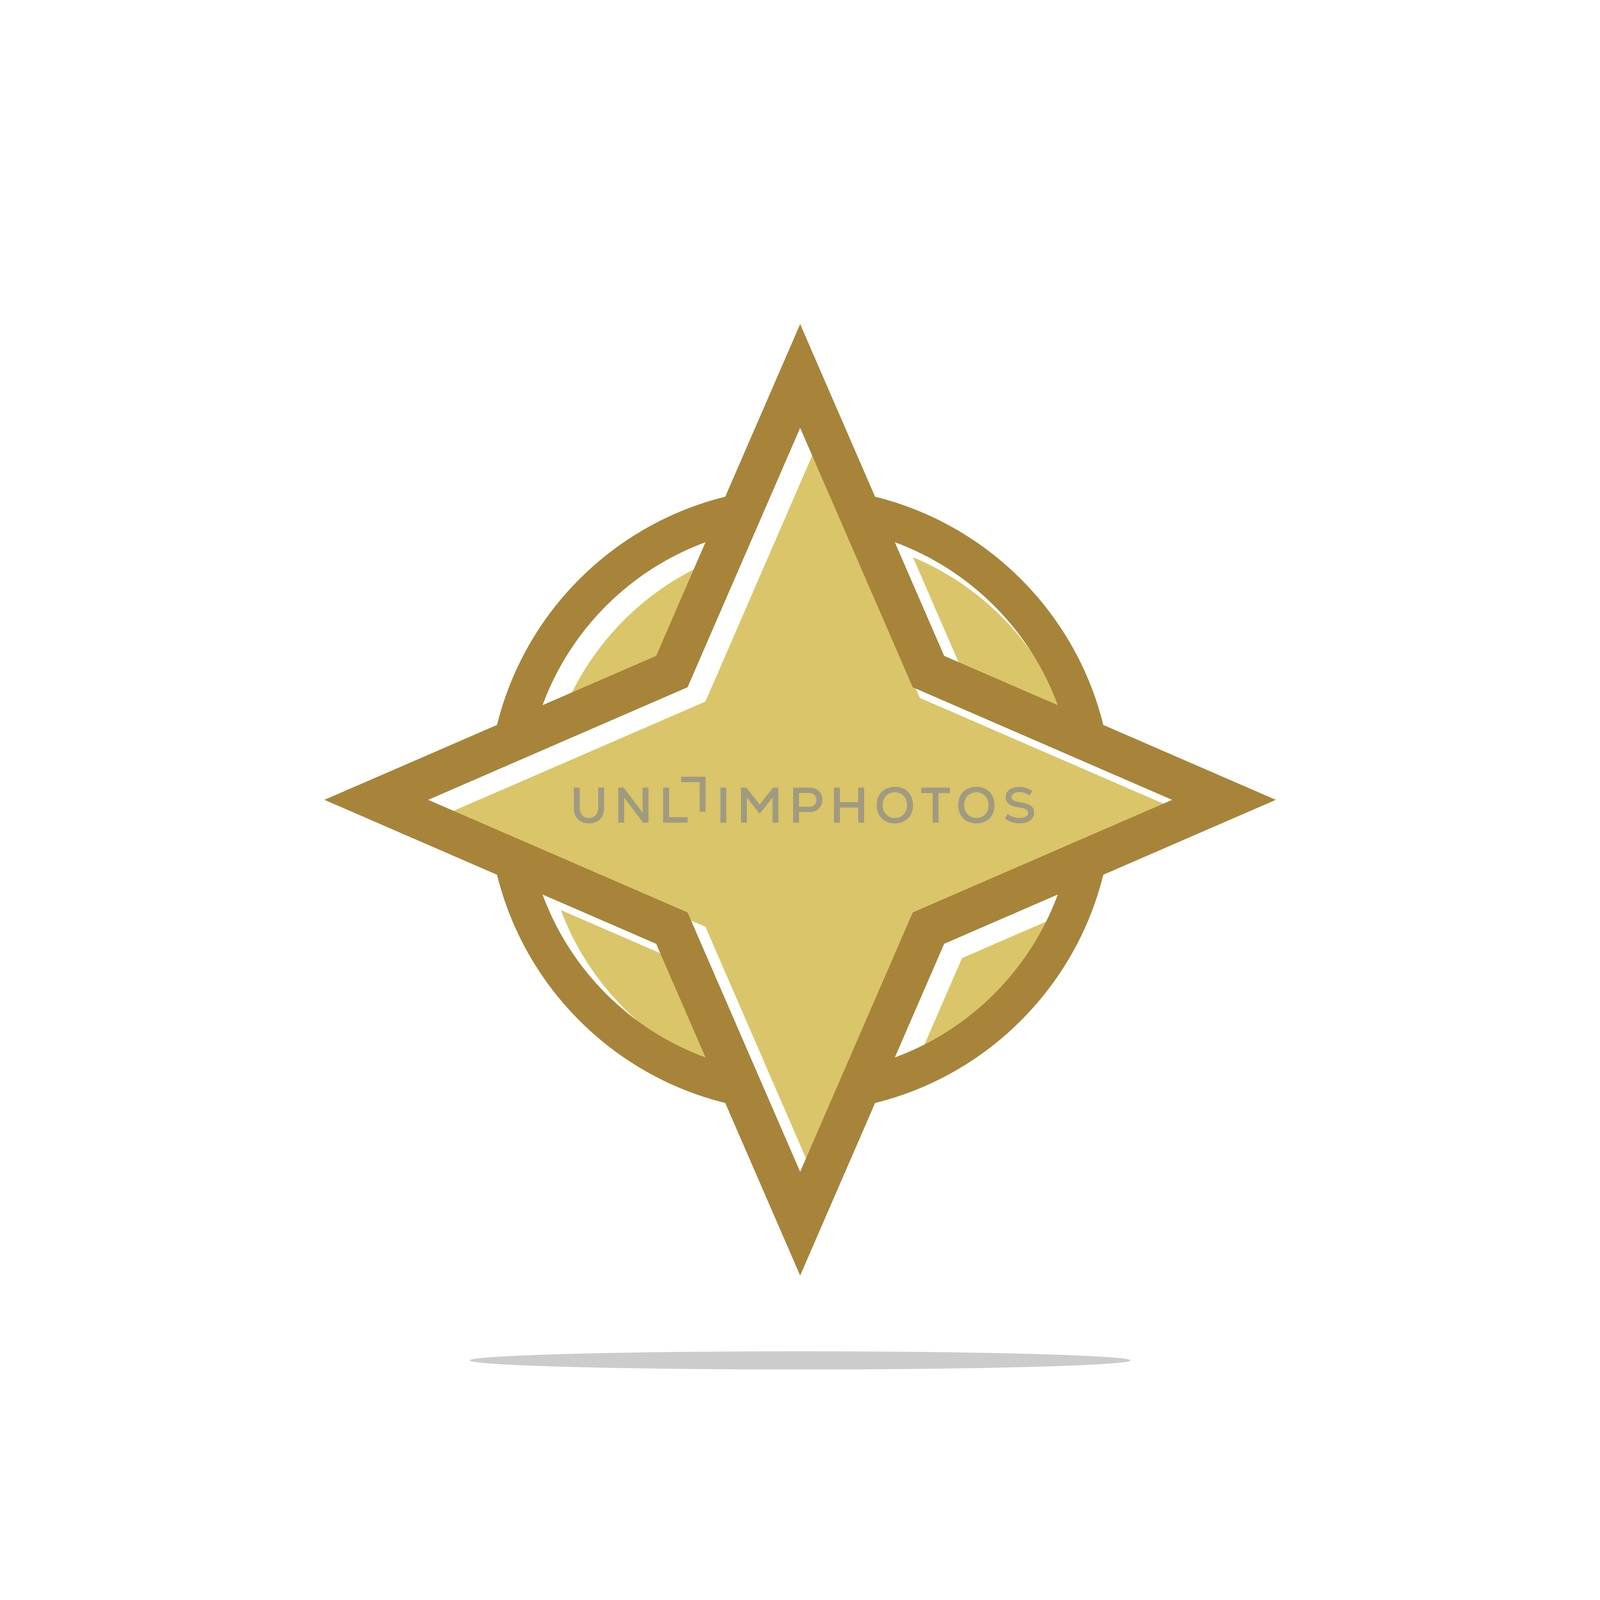 Compass Rose Gold Star Logo Template Illustration Design. Vector EPS 10.